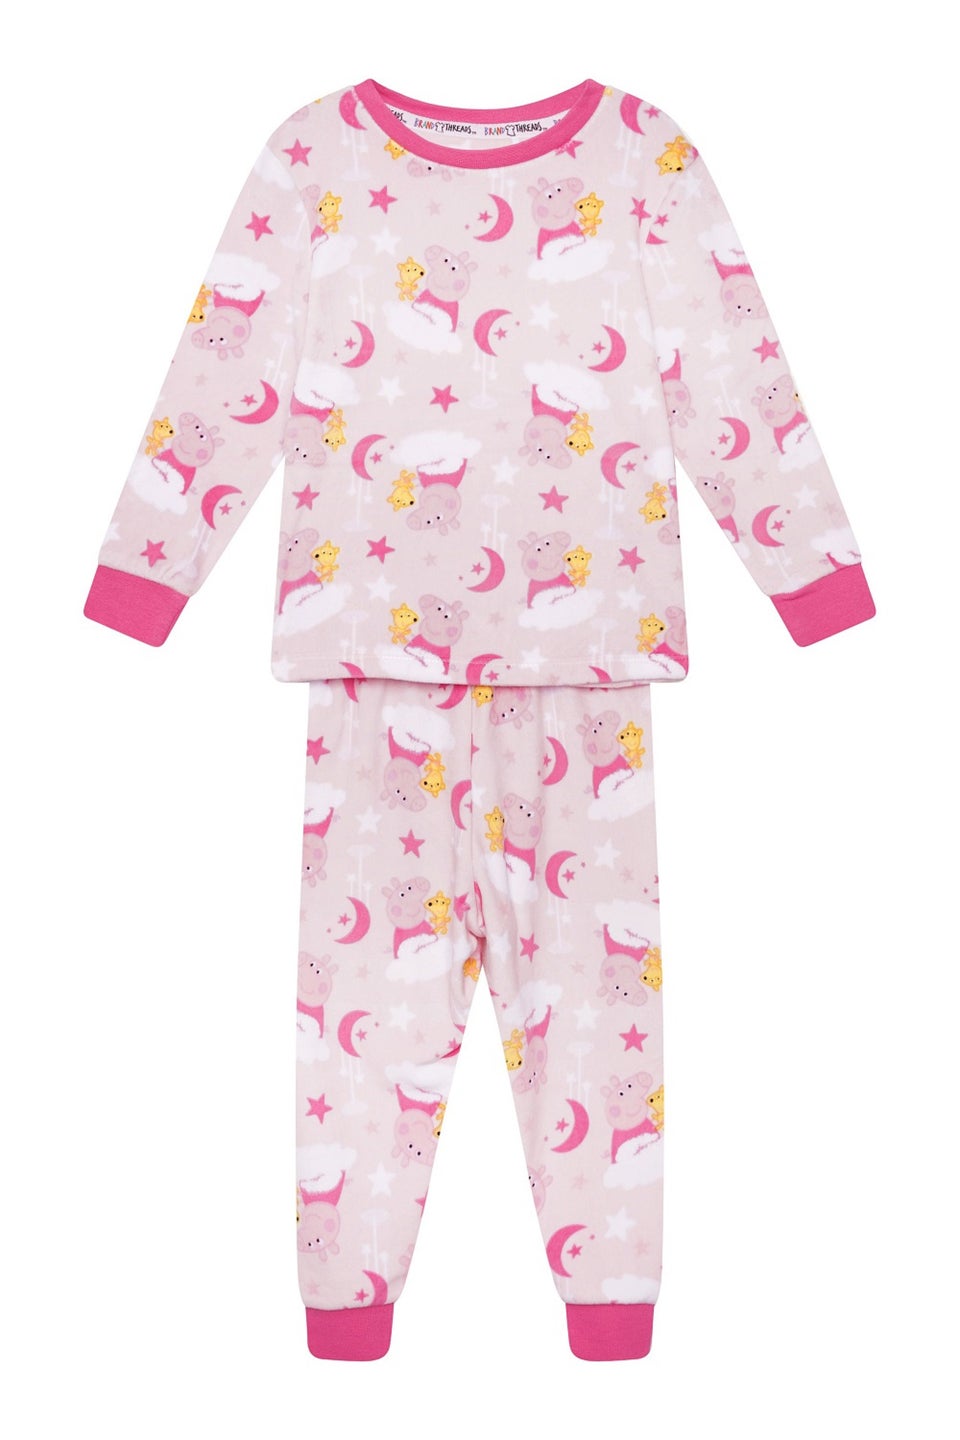 Brand Threads Kids' Peppa Pig Fleece Pyjama Set